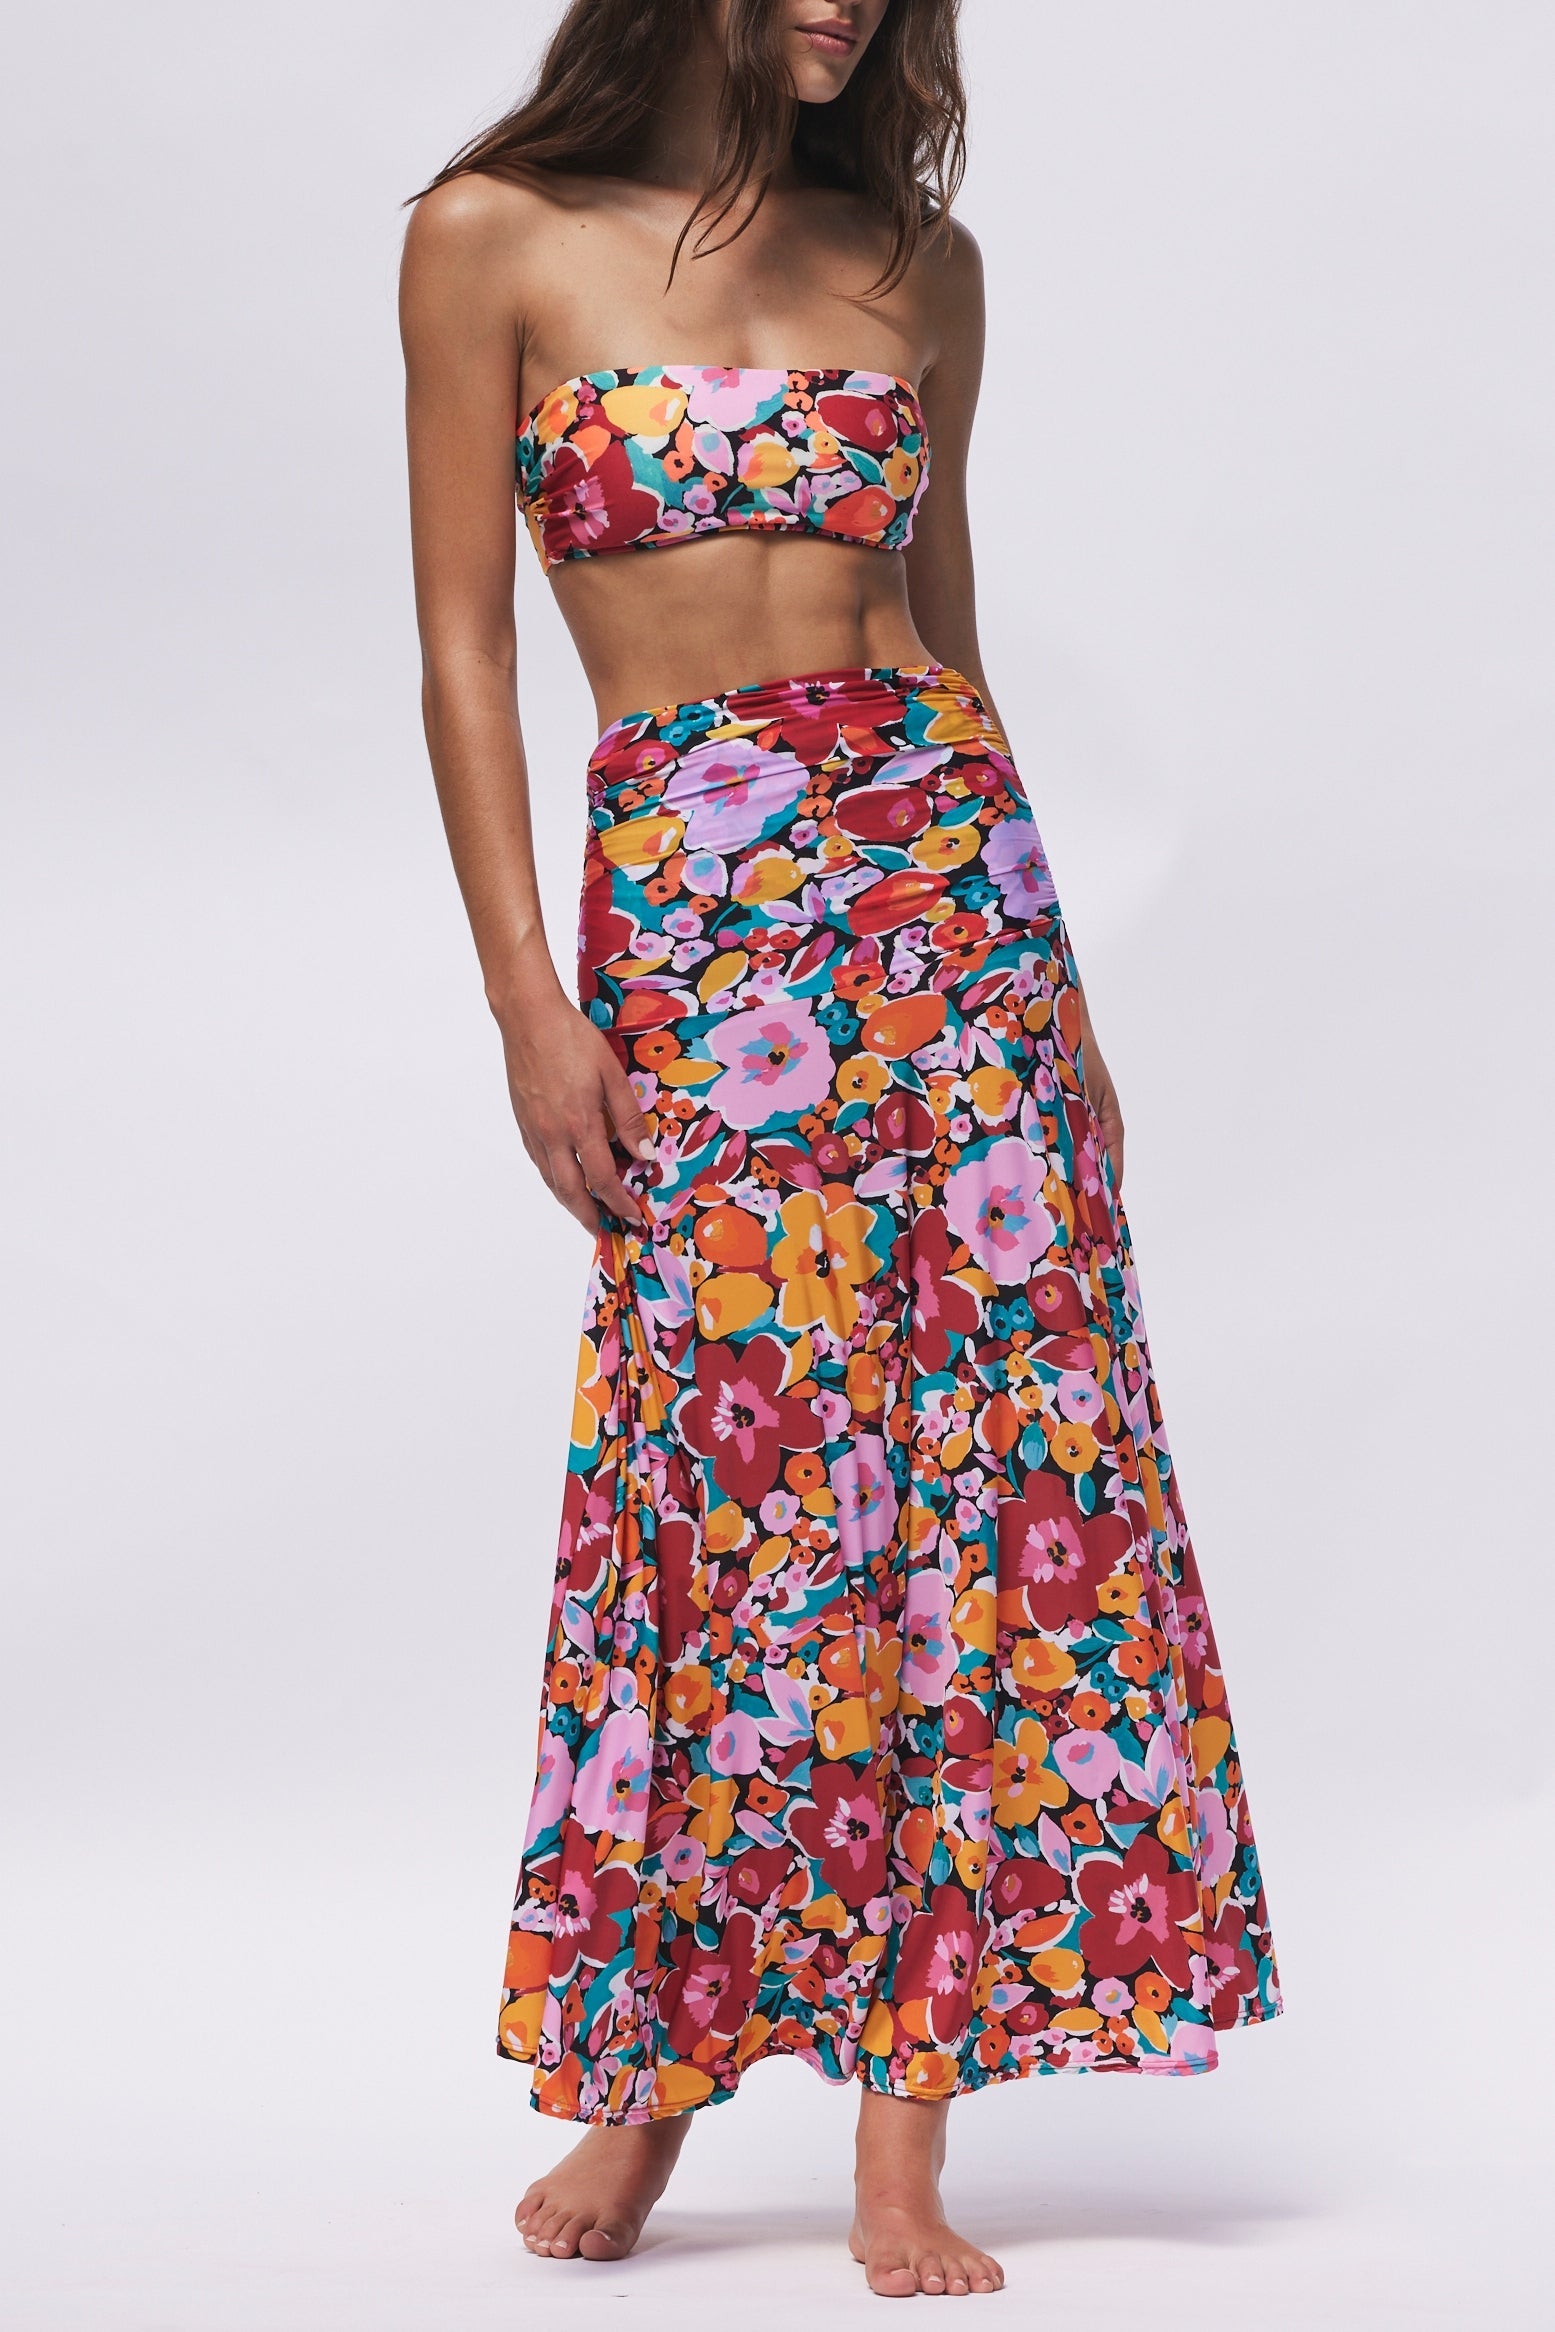 Rachel Skirt Dress by Hermoza